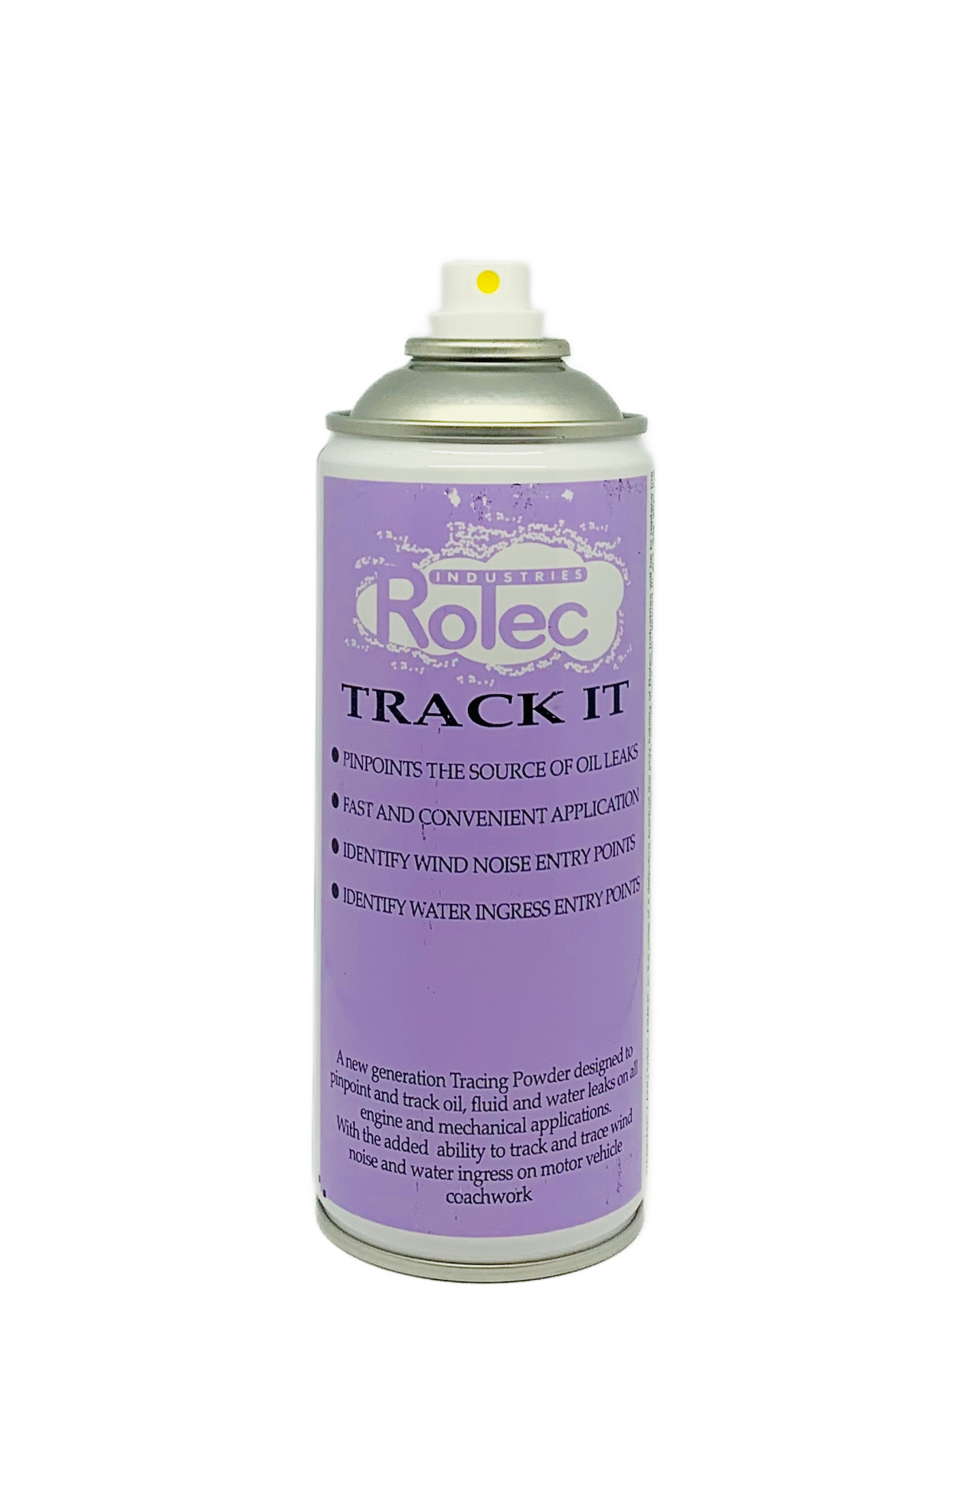 Track It Tracing Powder Water Dust Ingress Powder (TP 295)